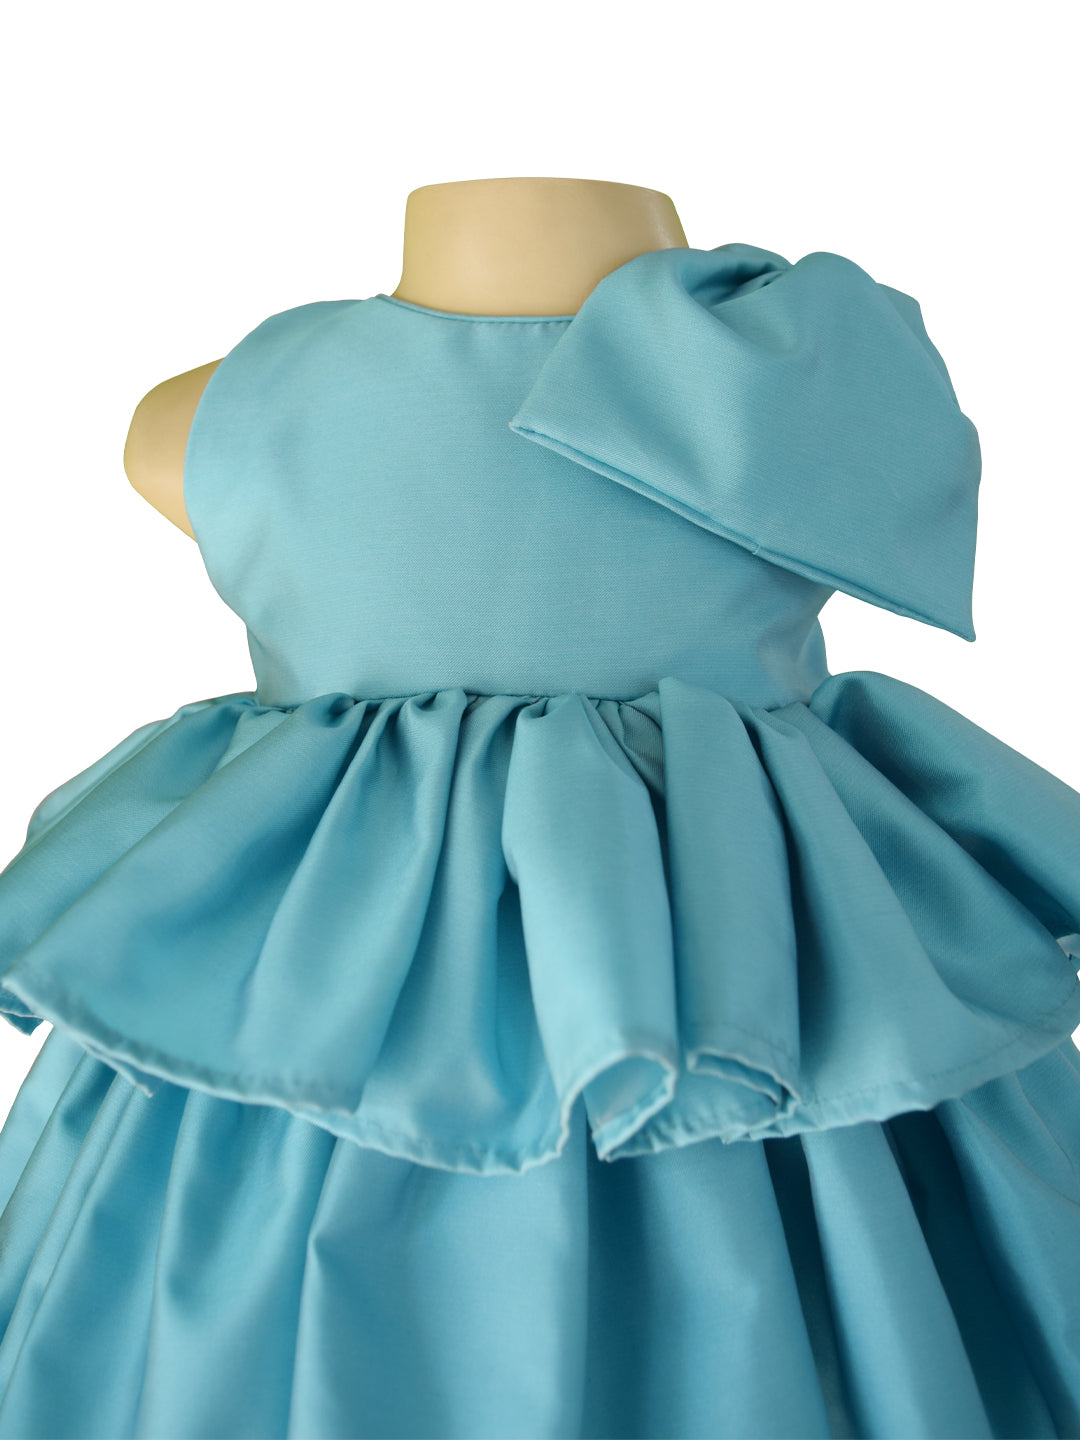 Kids Party Dress_Faye Blue Tiered Dress